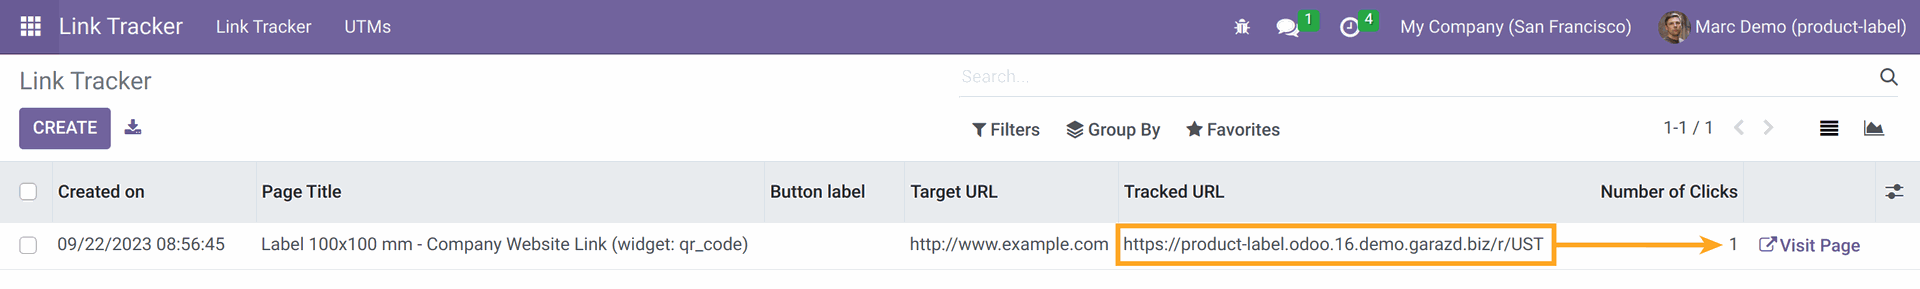 odoo product label shorten url tracking clicks